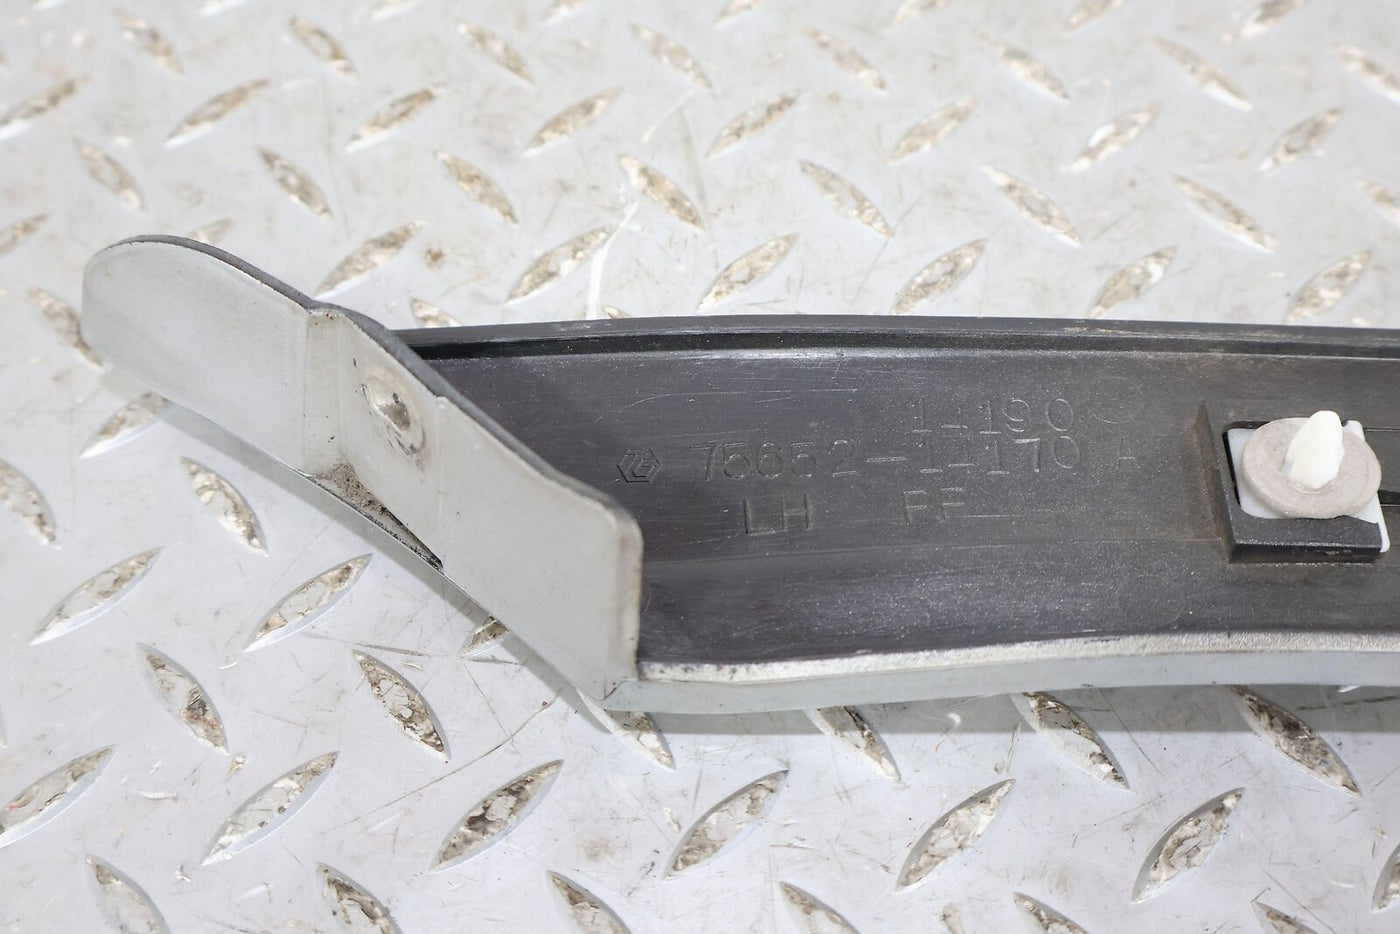 89-92 Toyota Supra MK3 Rear Left LH Quarter Panel Moulding Trim (Faded Gray)